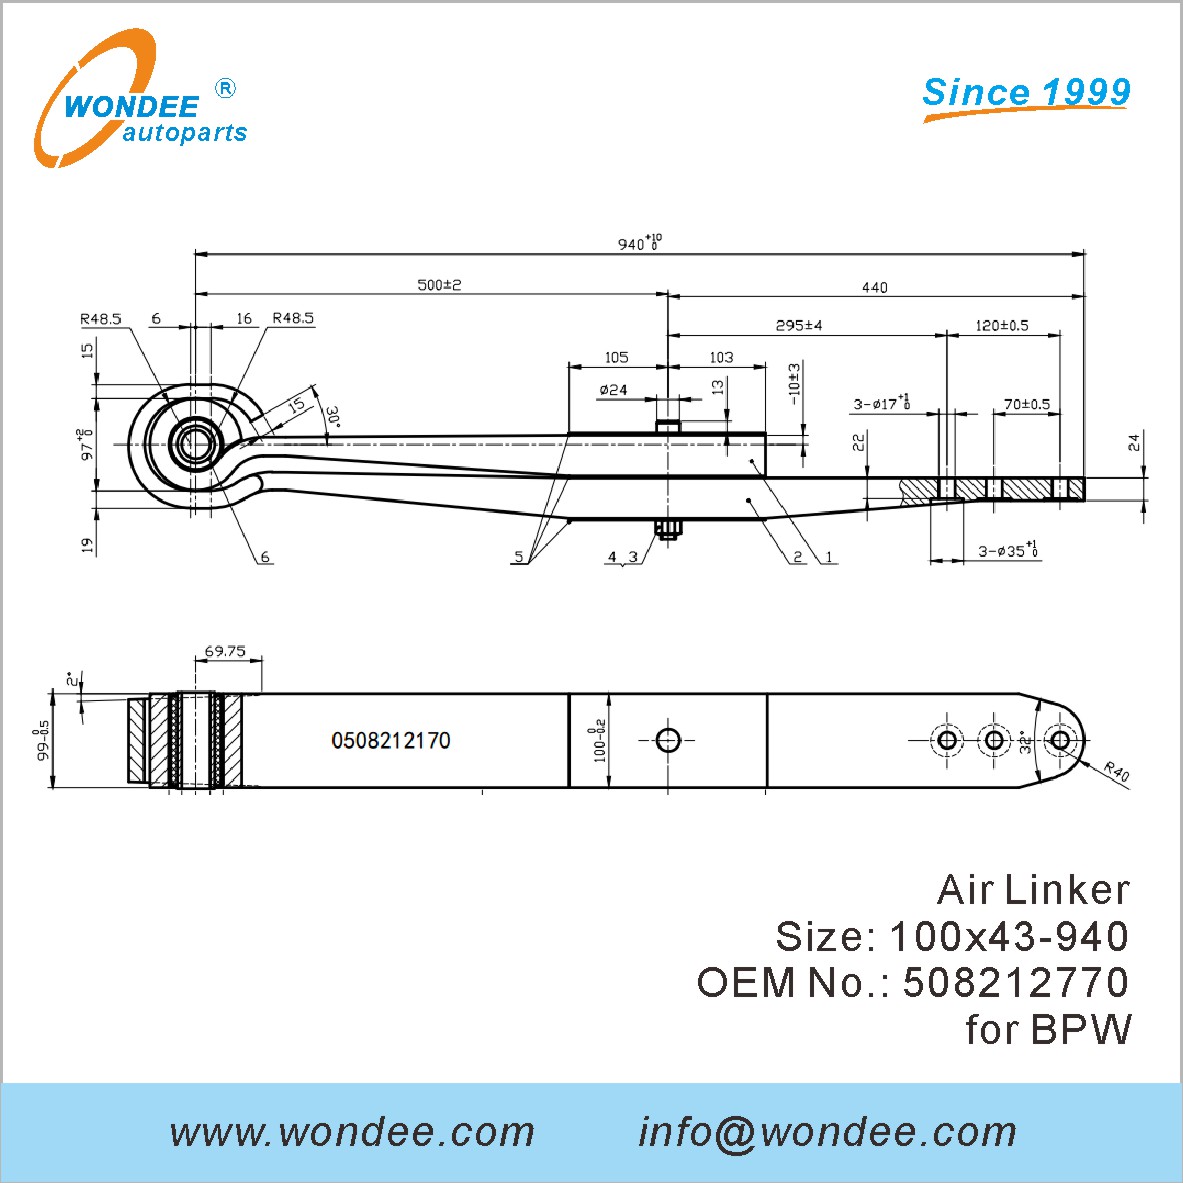 WONDEE Autoparts Air Linker OEM 508212770 for BPW